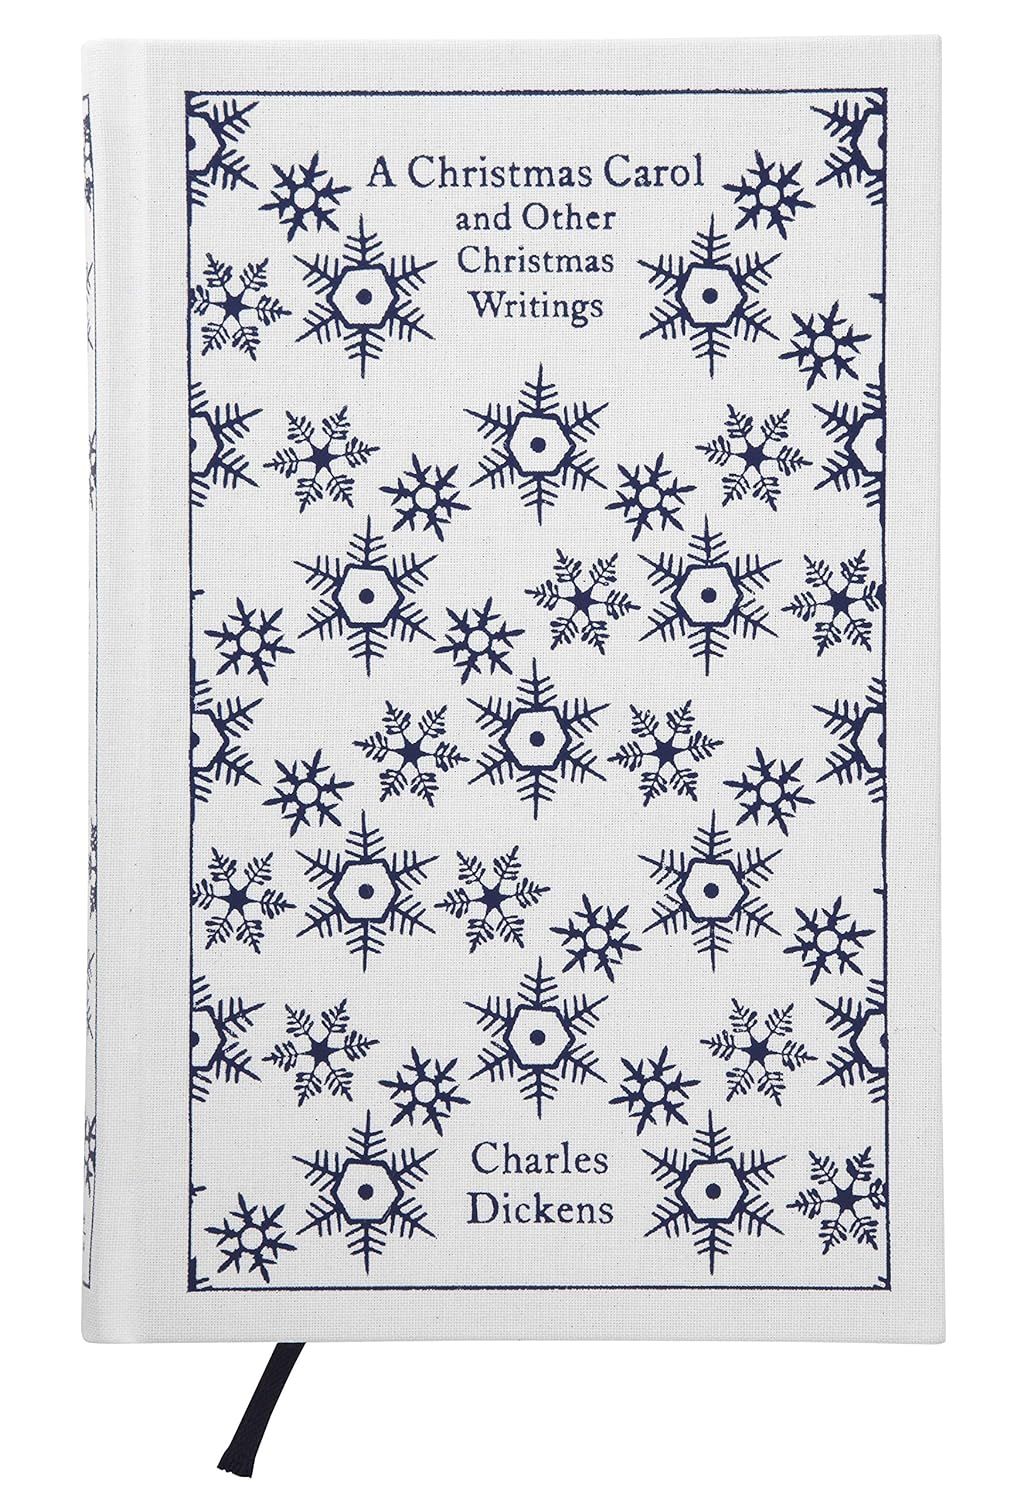  A Christmas Carol and Other Christmas Writings: Charles Dickens 